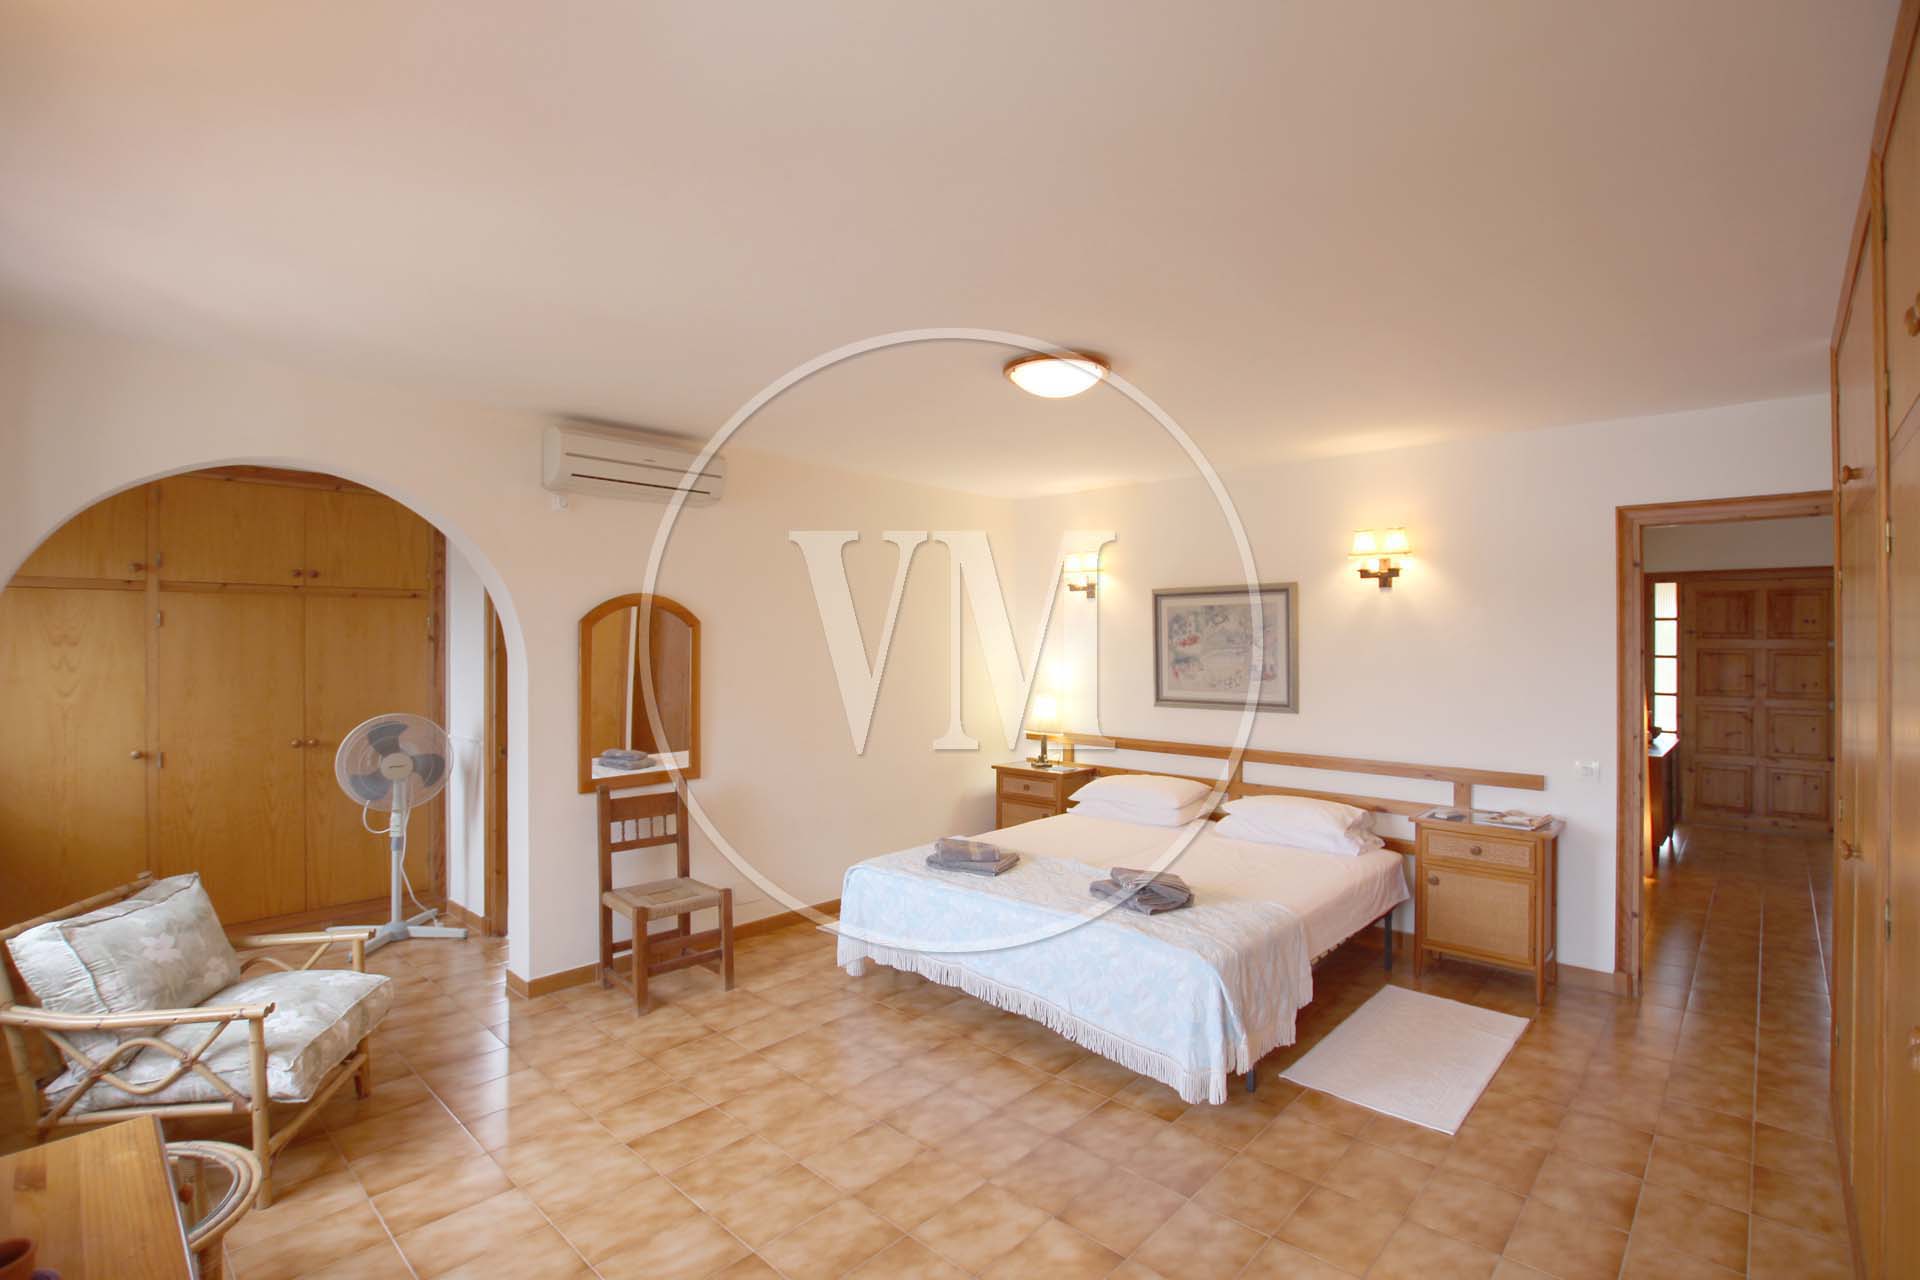 Villa Schlafzimmer 1 in Halle 7551 Mahon Menorca